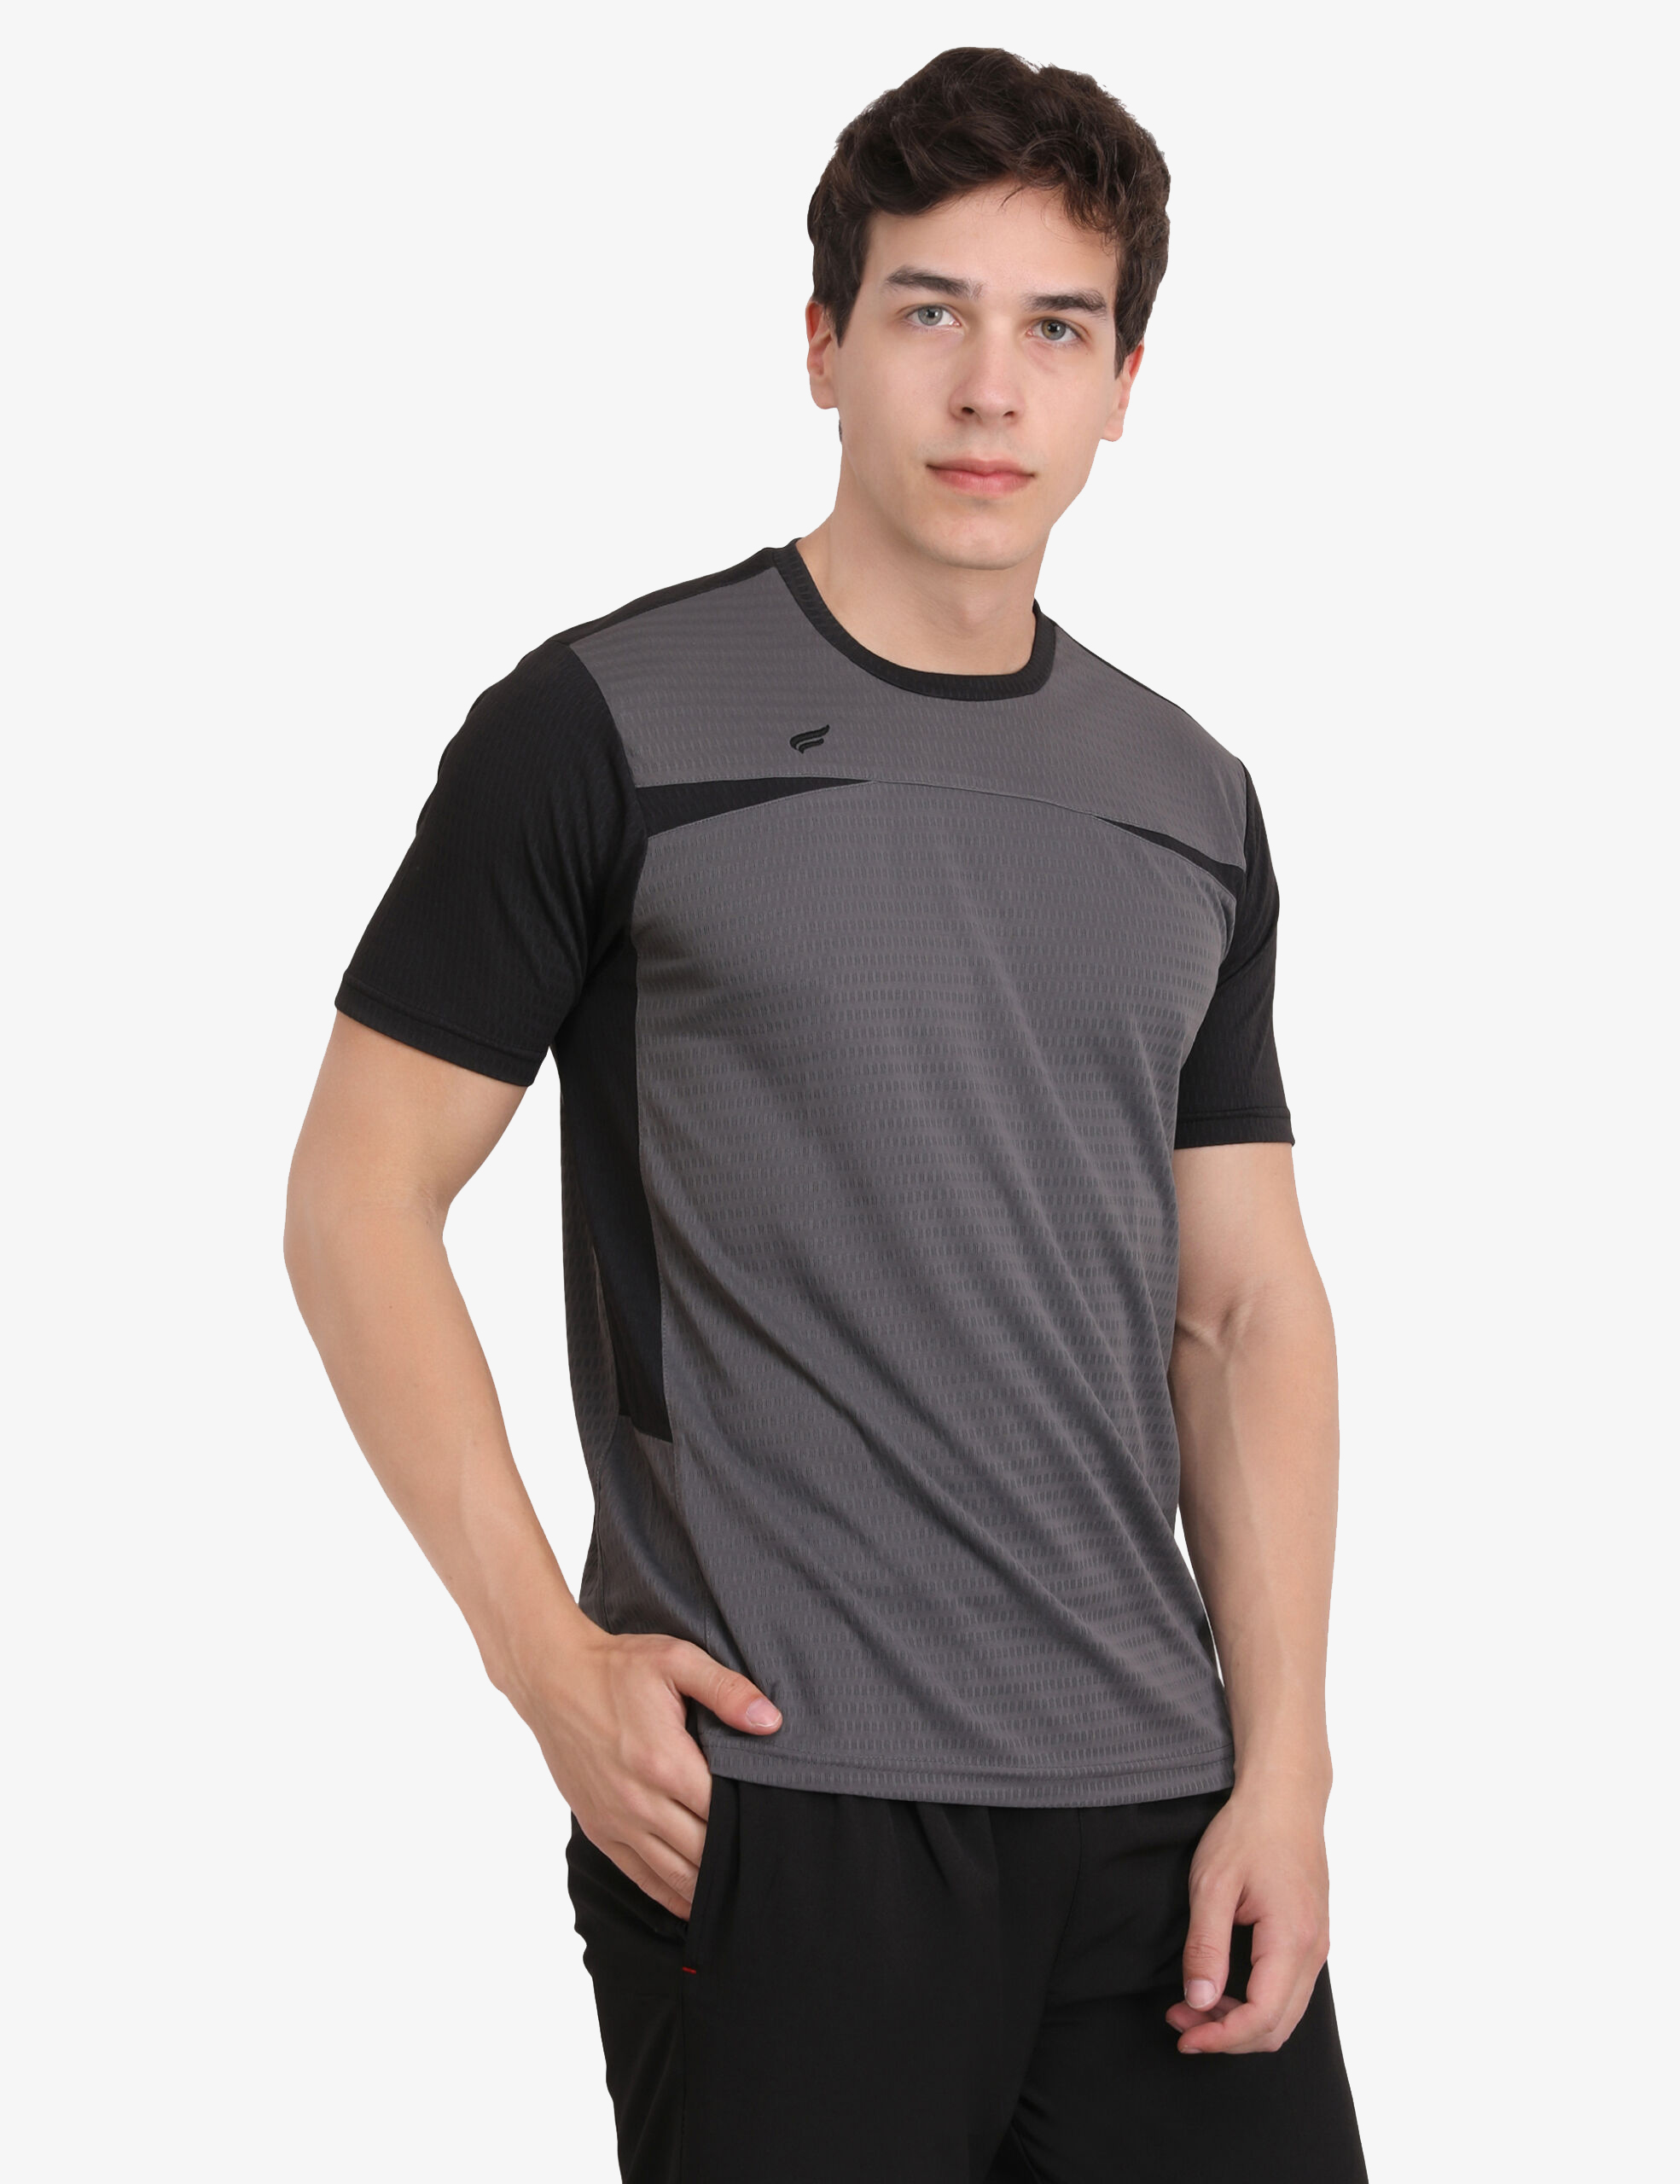 ASI Styler Dark Grey Sports T-shirt for Men